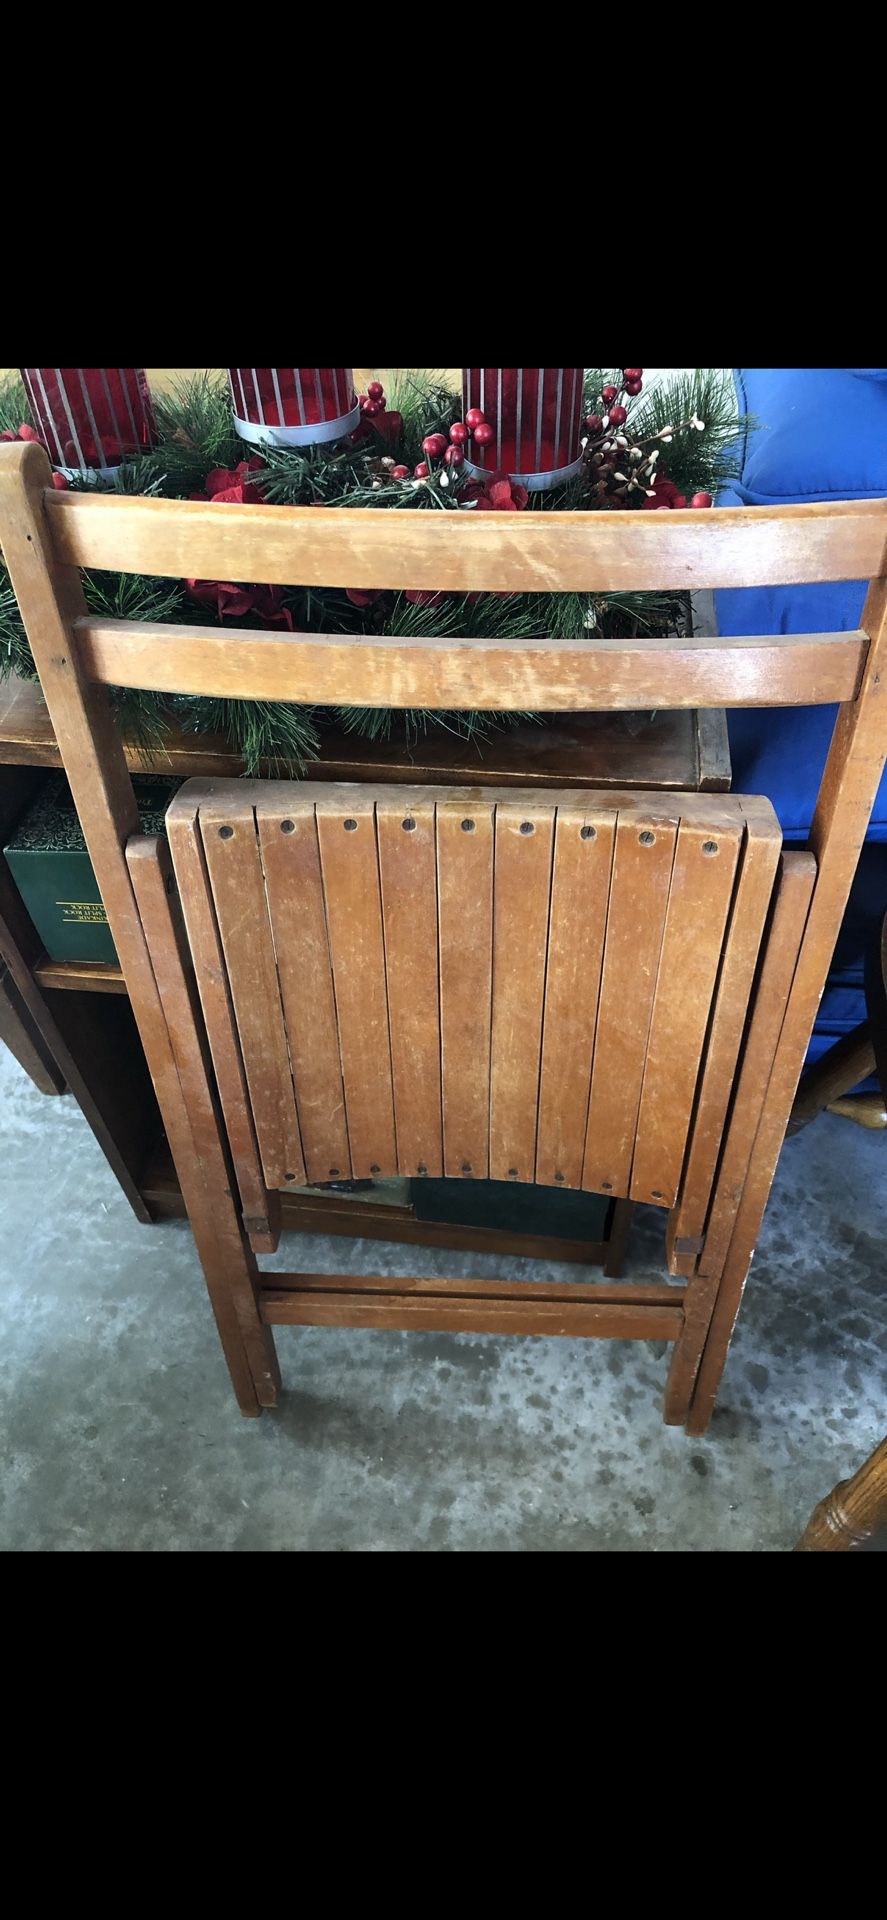 Antique Folding Chair-$30.00